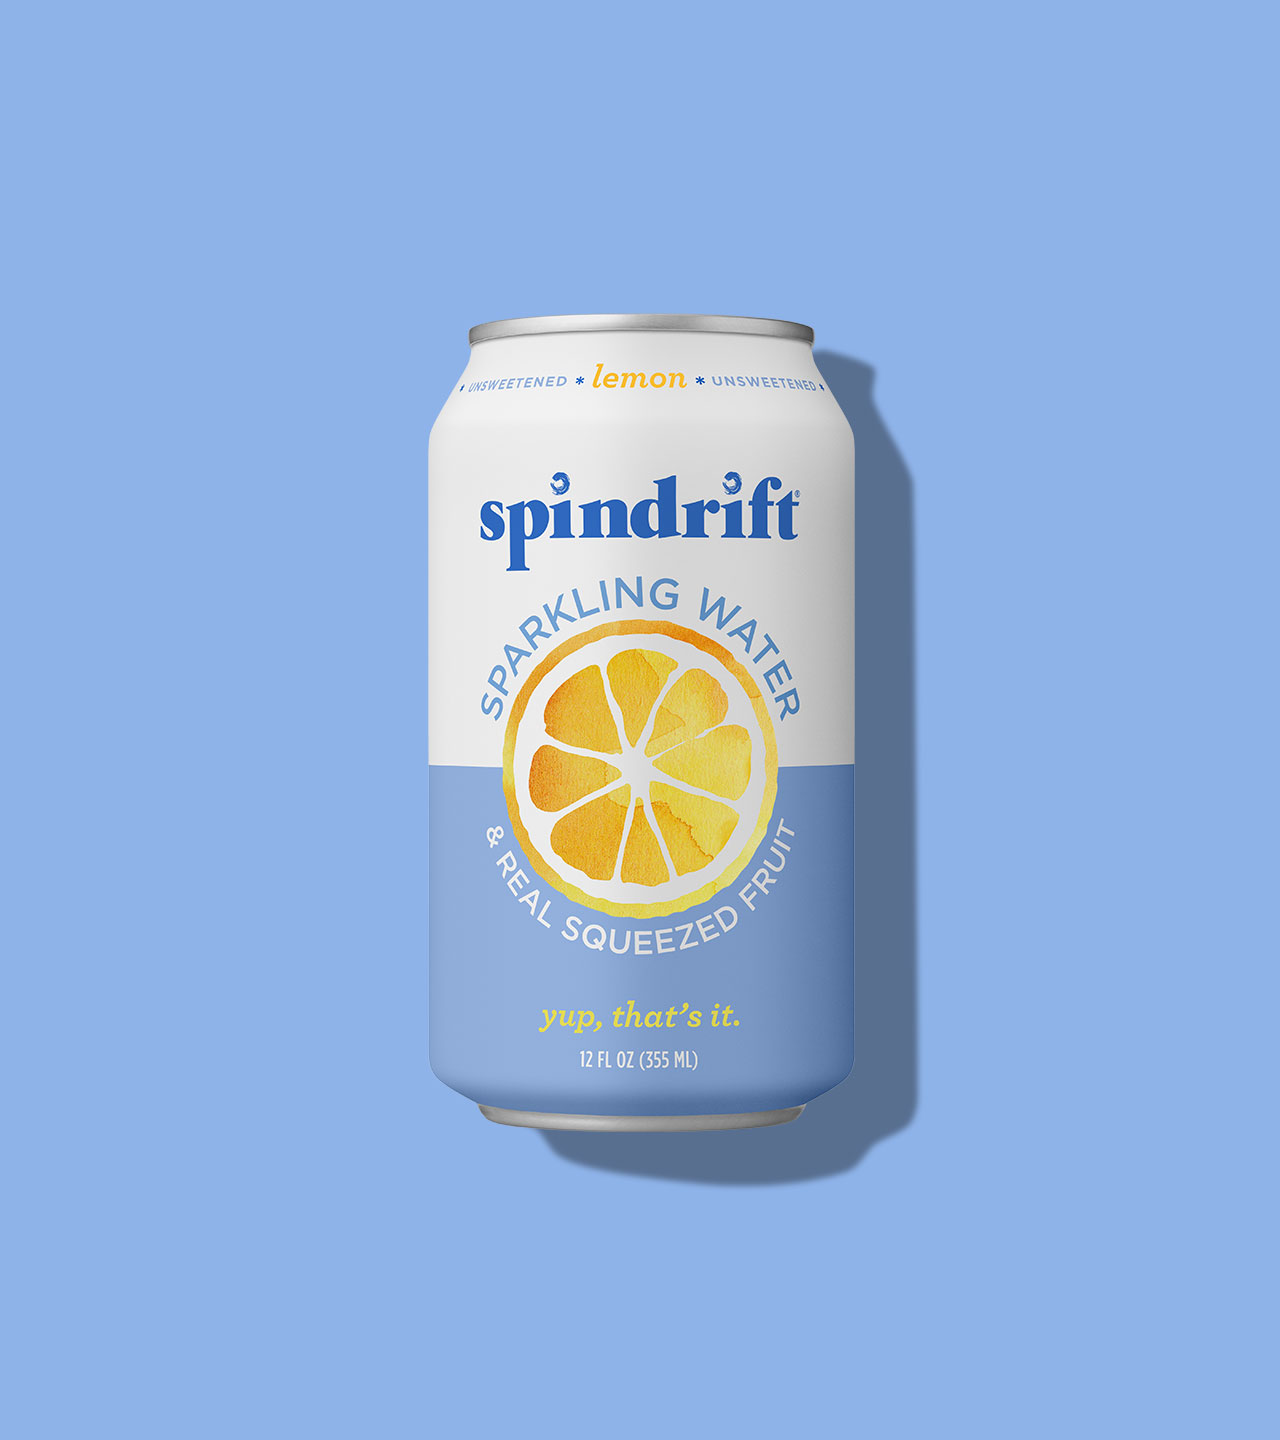 Spindrift Lemon Packaging, Branding and Design by Colony